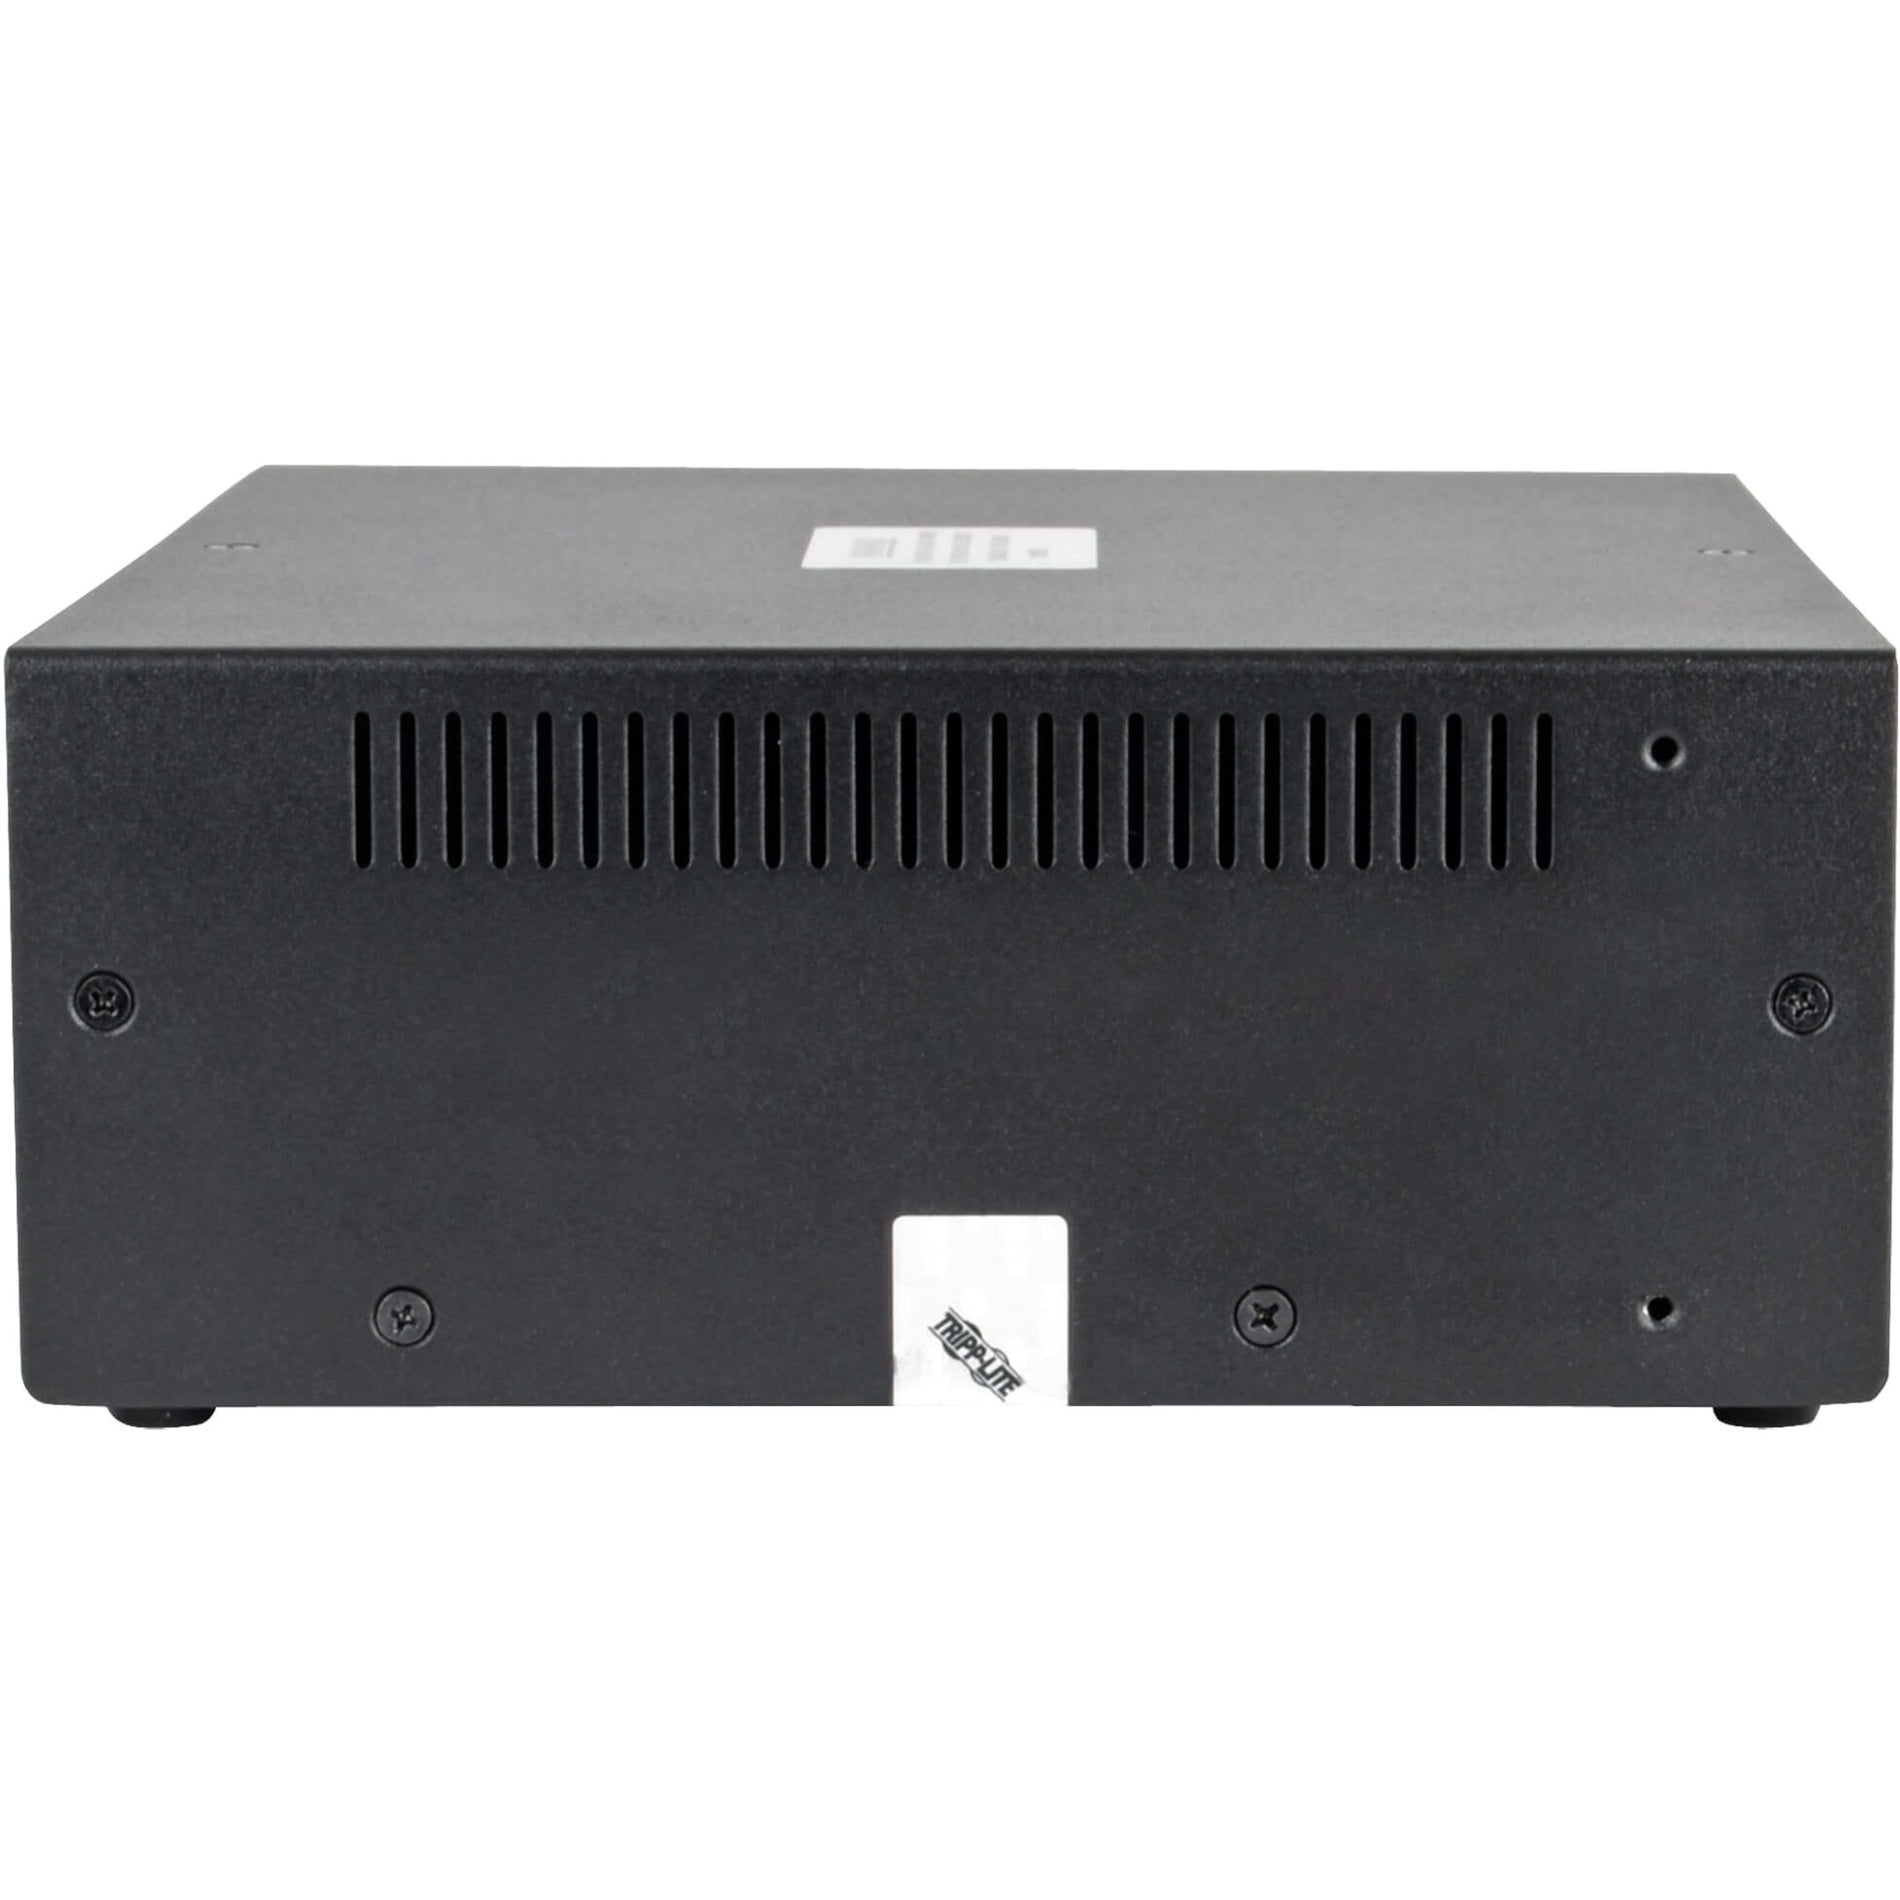 Tripp Lite B002-DV2AC4 4-Port NIAP PP3.0-Certified DVI-I KVM Switch Maximum Video Resolution 2560 x 1600 3 Year Warranty